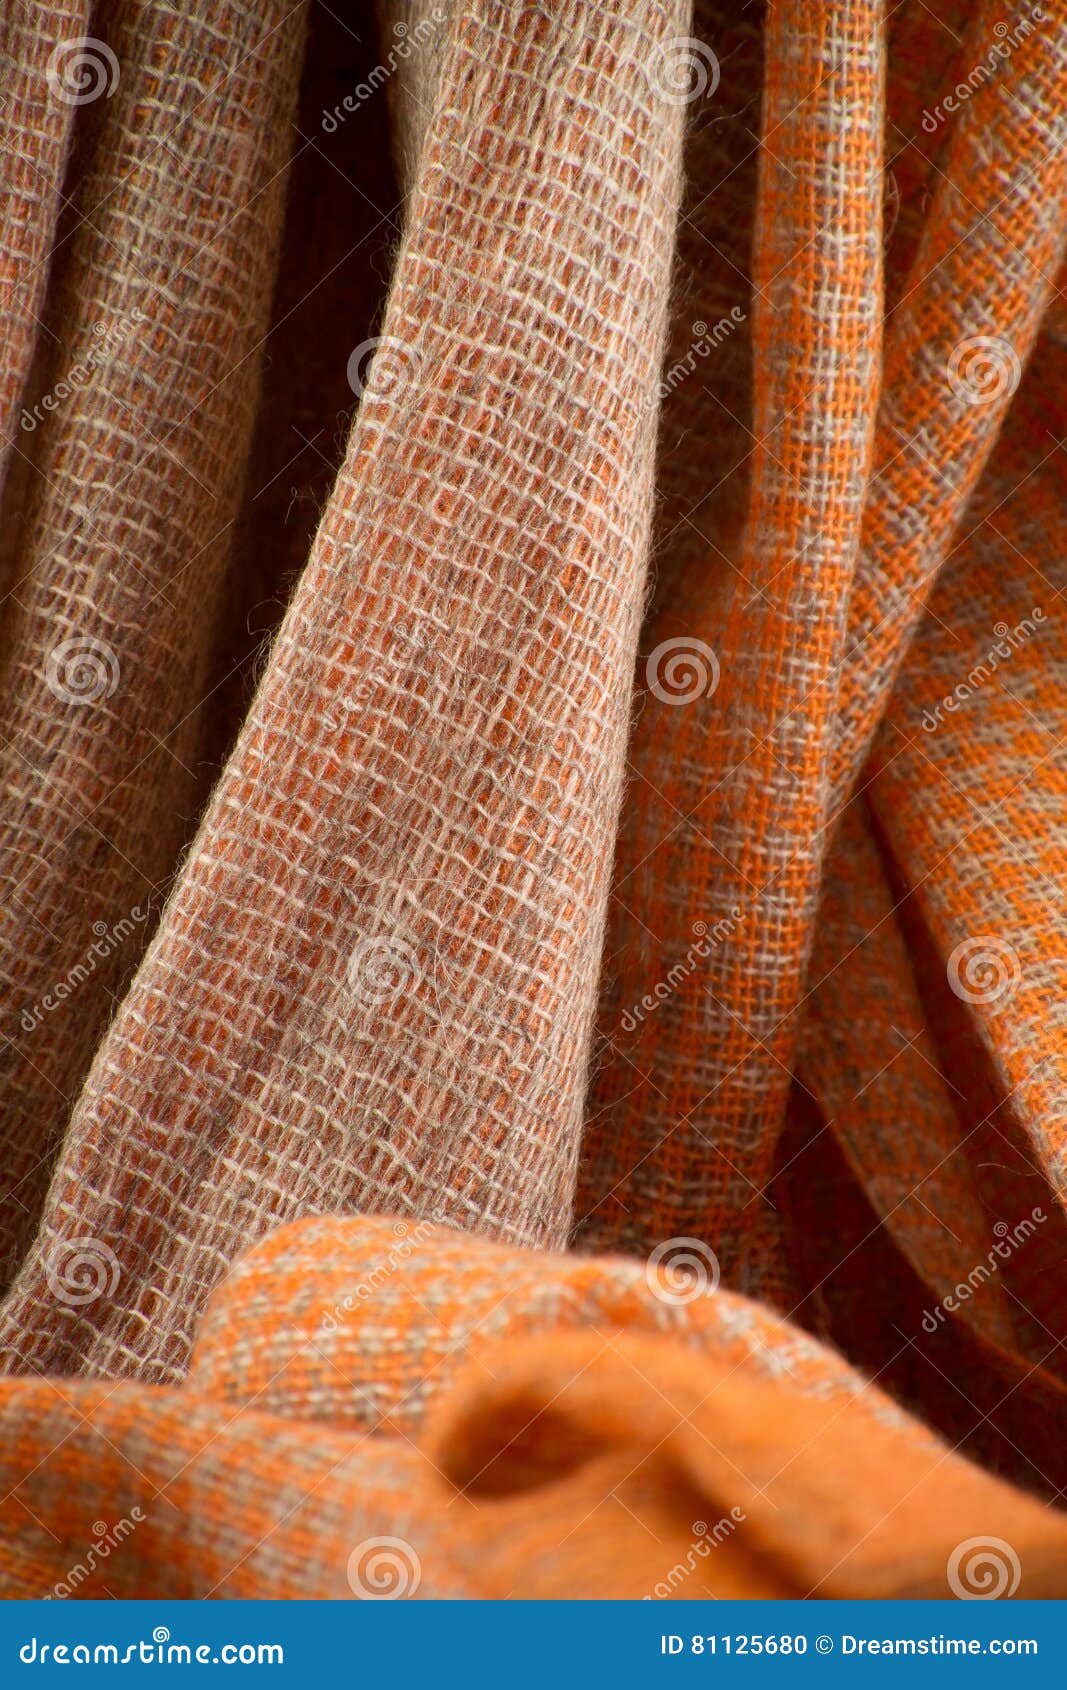 plot scarf fabric pashmine